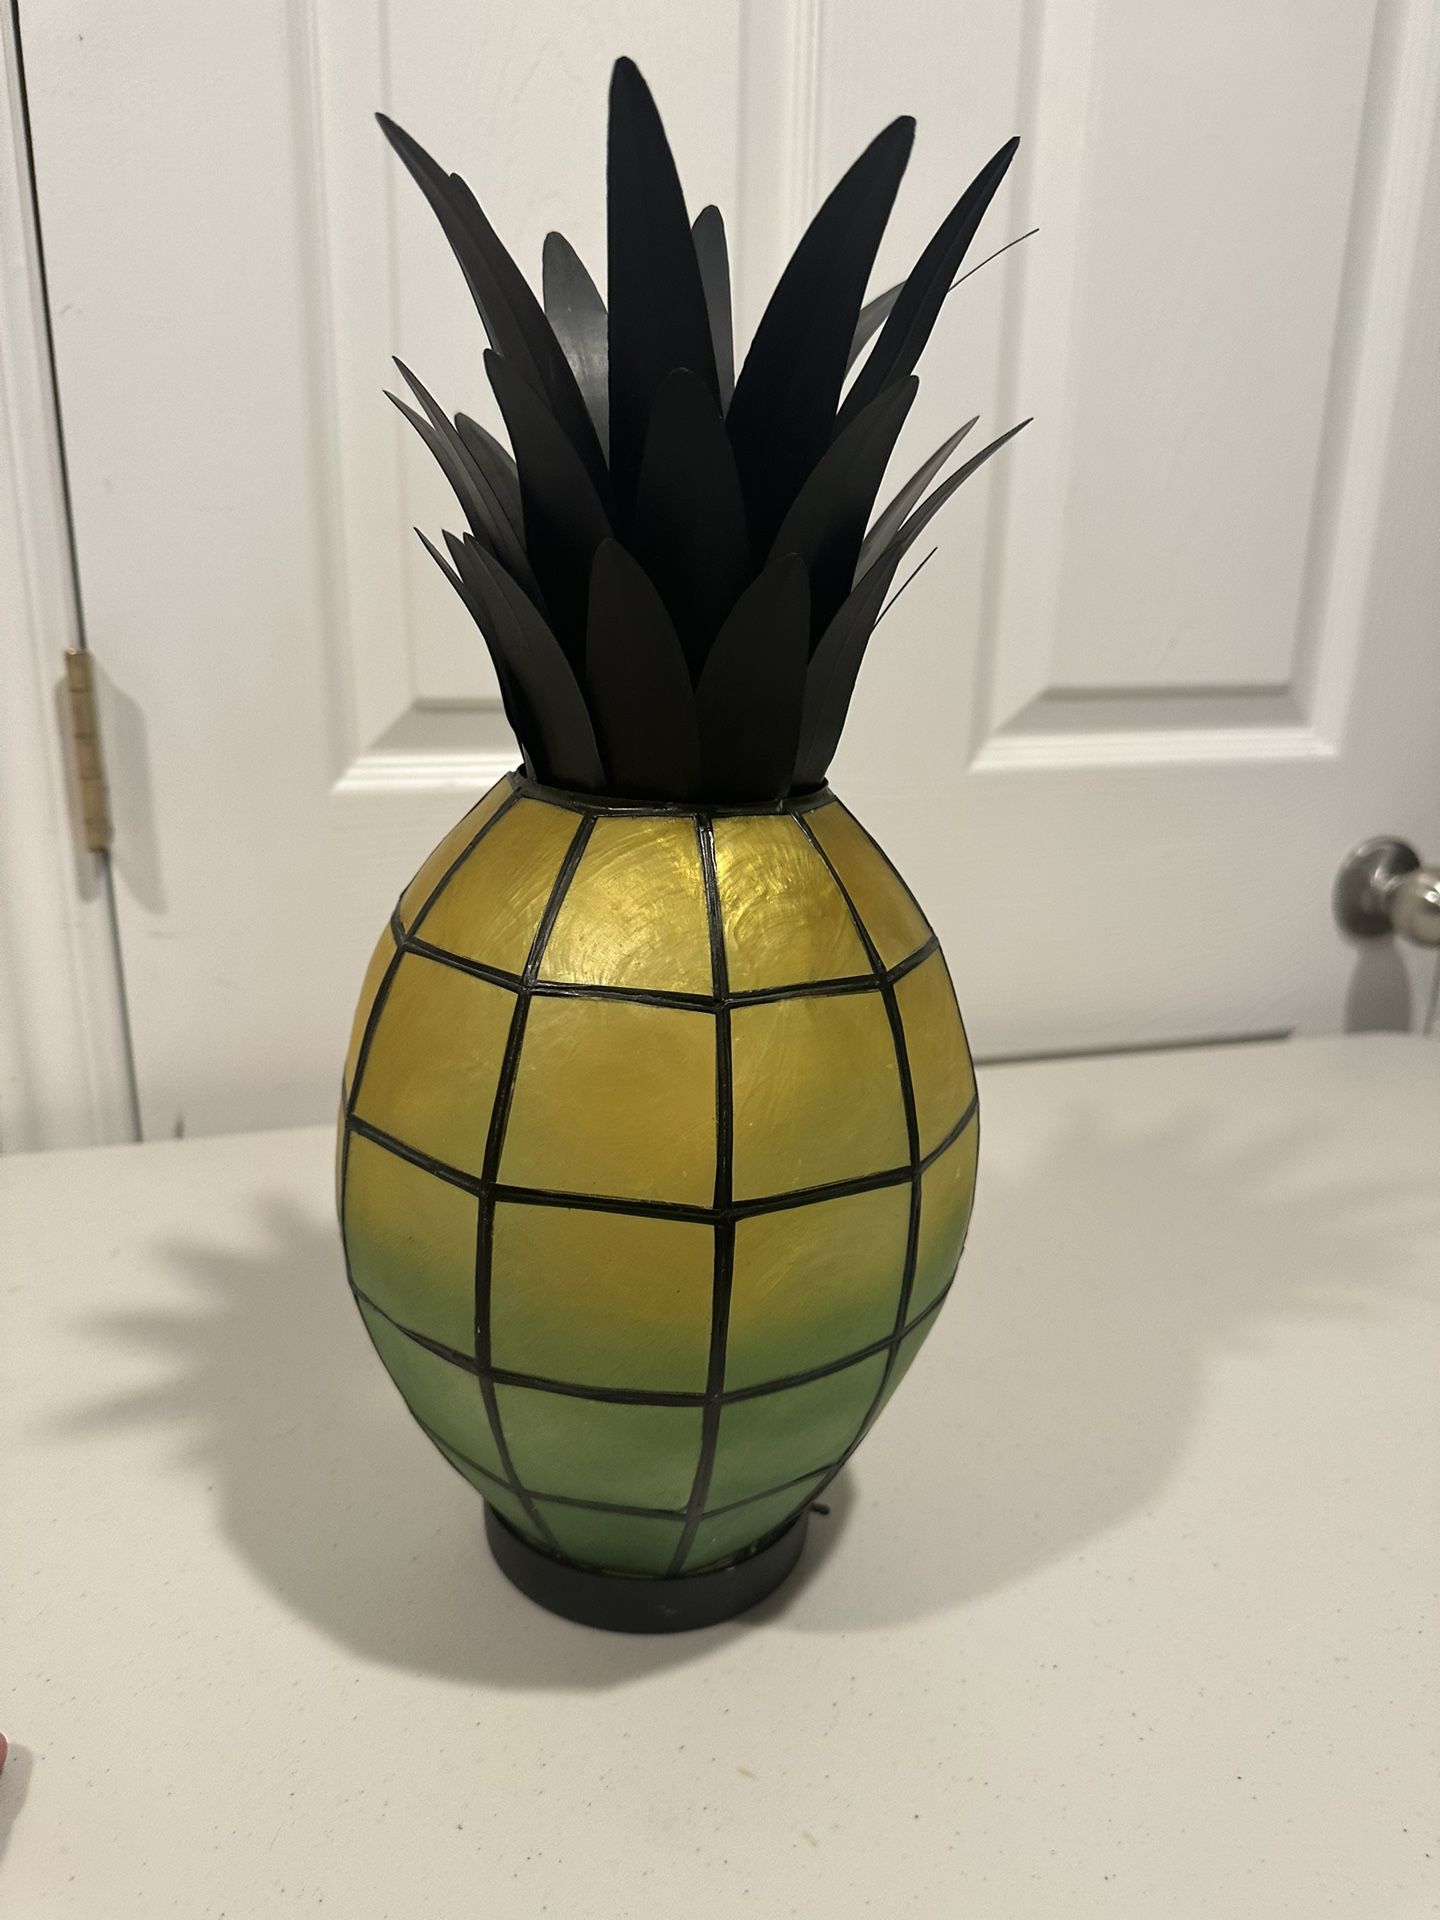 Amazing Glass & Metal Decorative Pineapple Candle Holder/Hurricane!